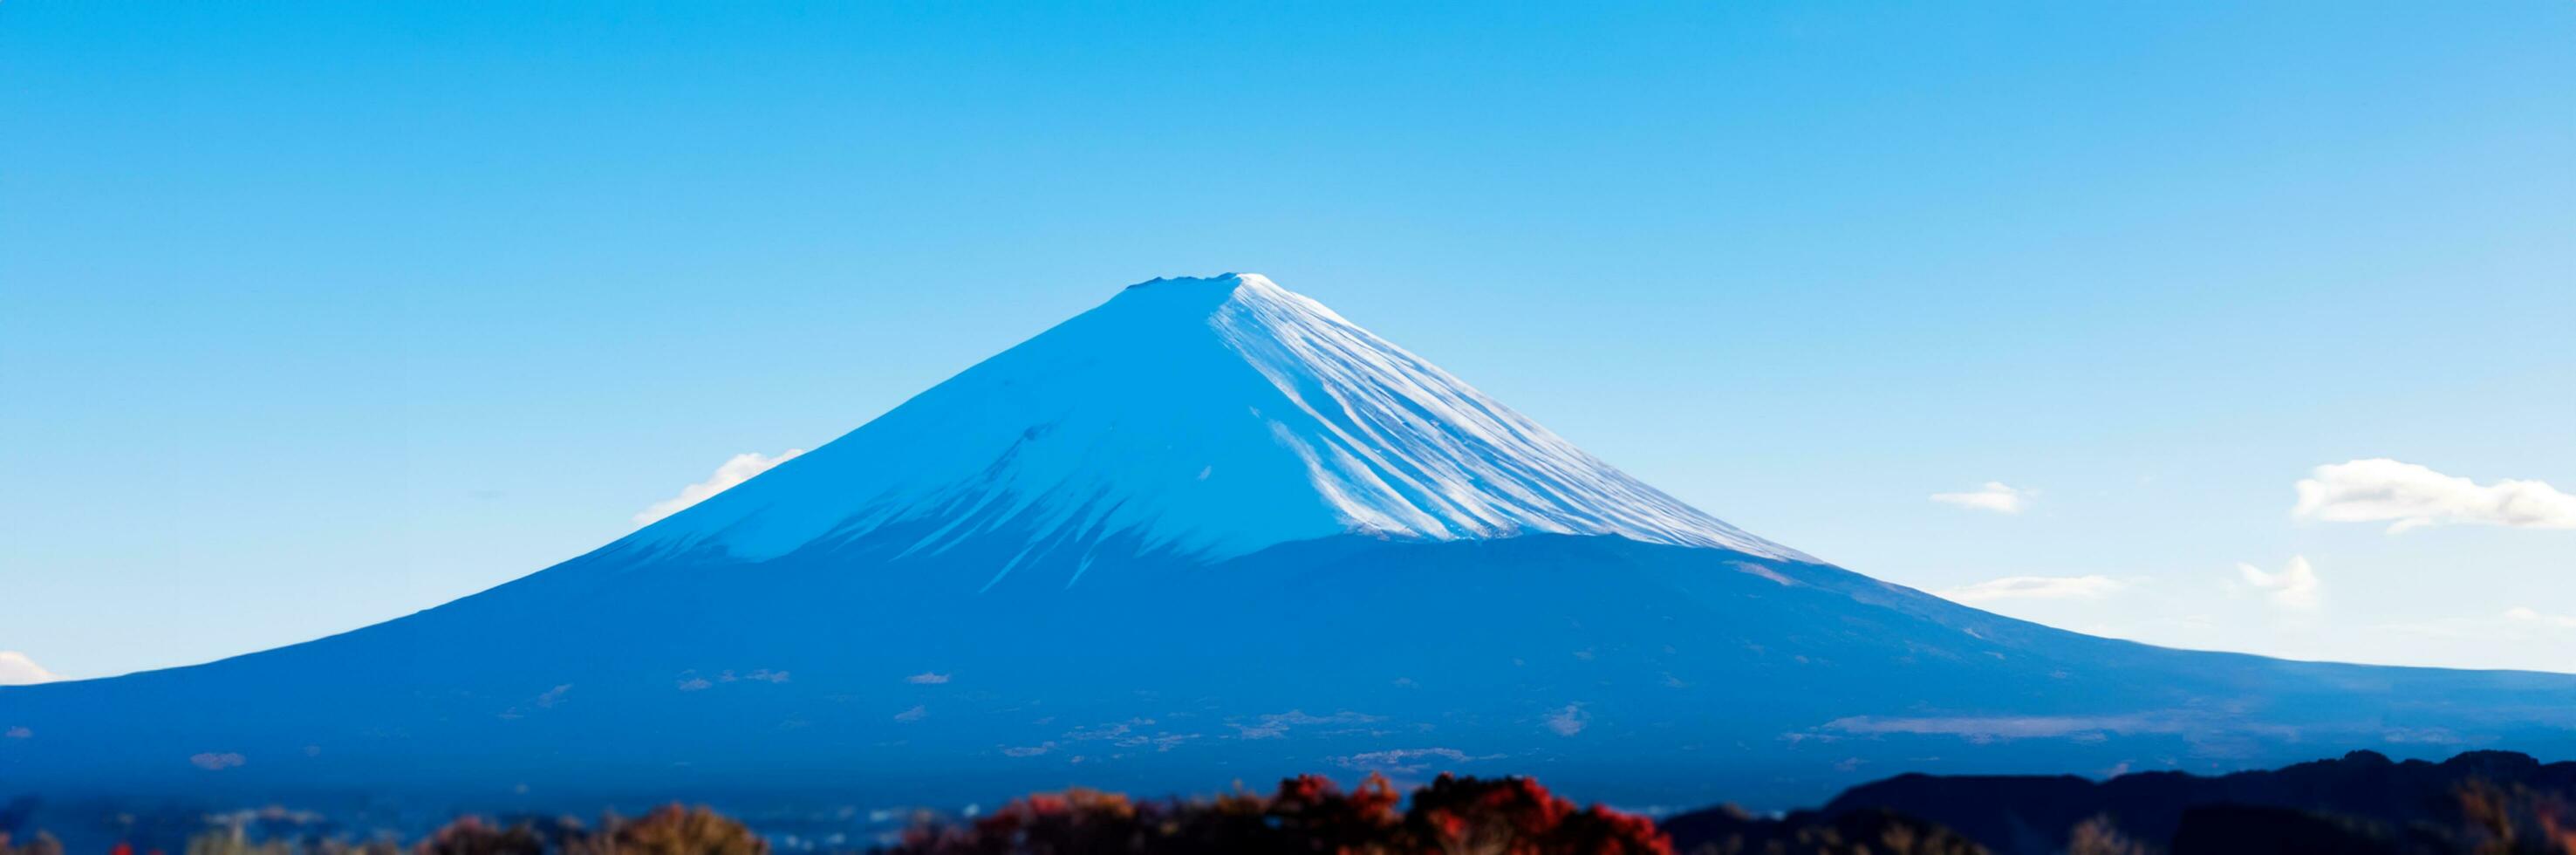 Mount Fuji in Japan Panoramic image 3D illustration photo